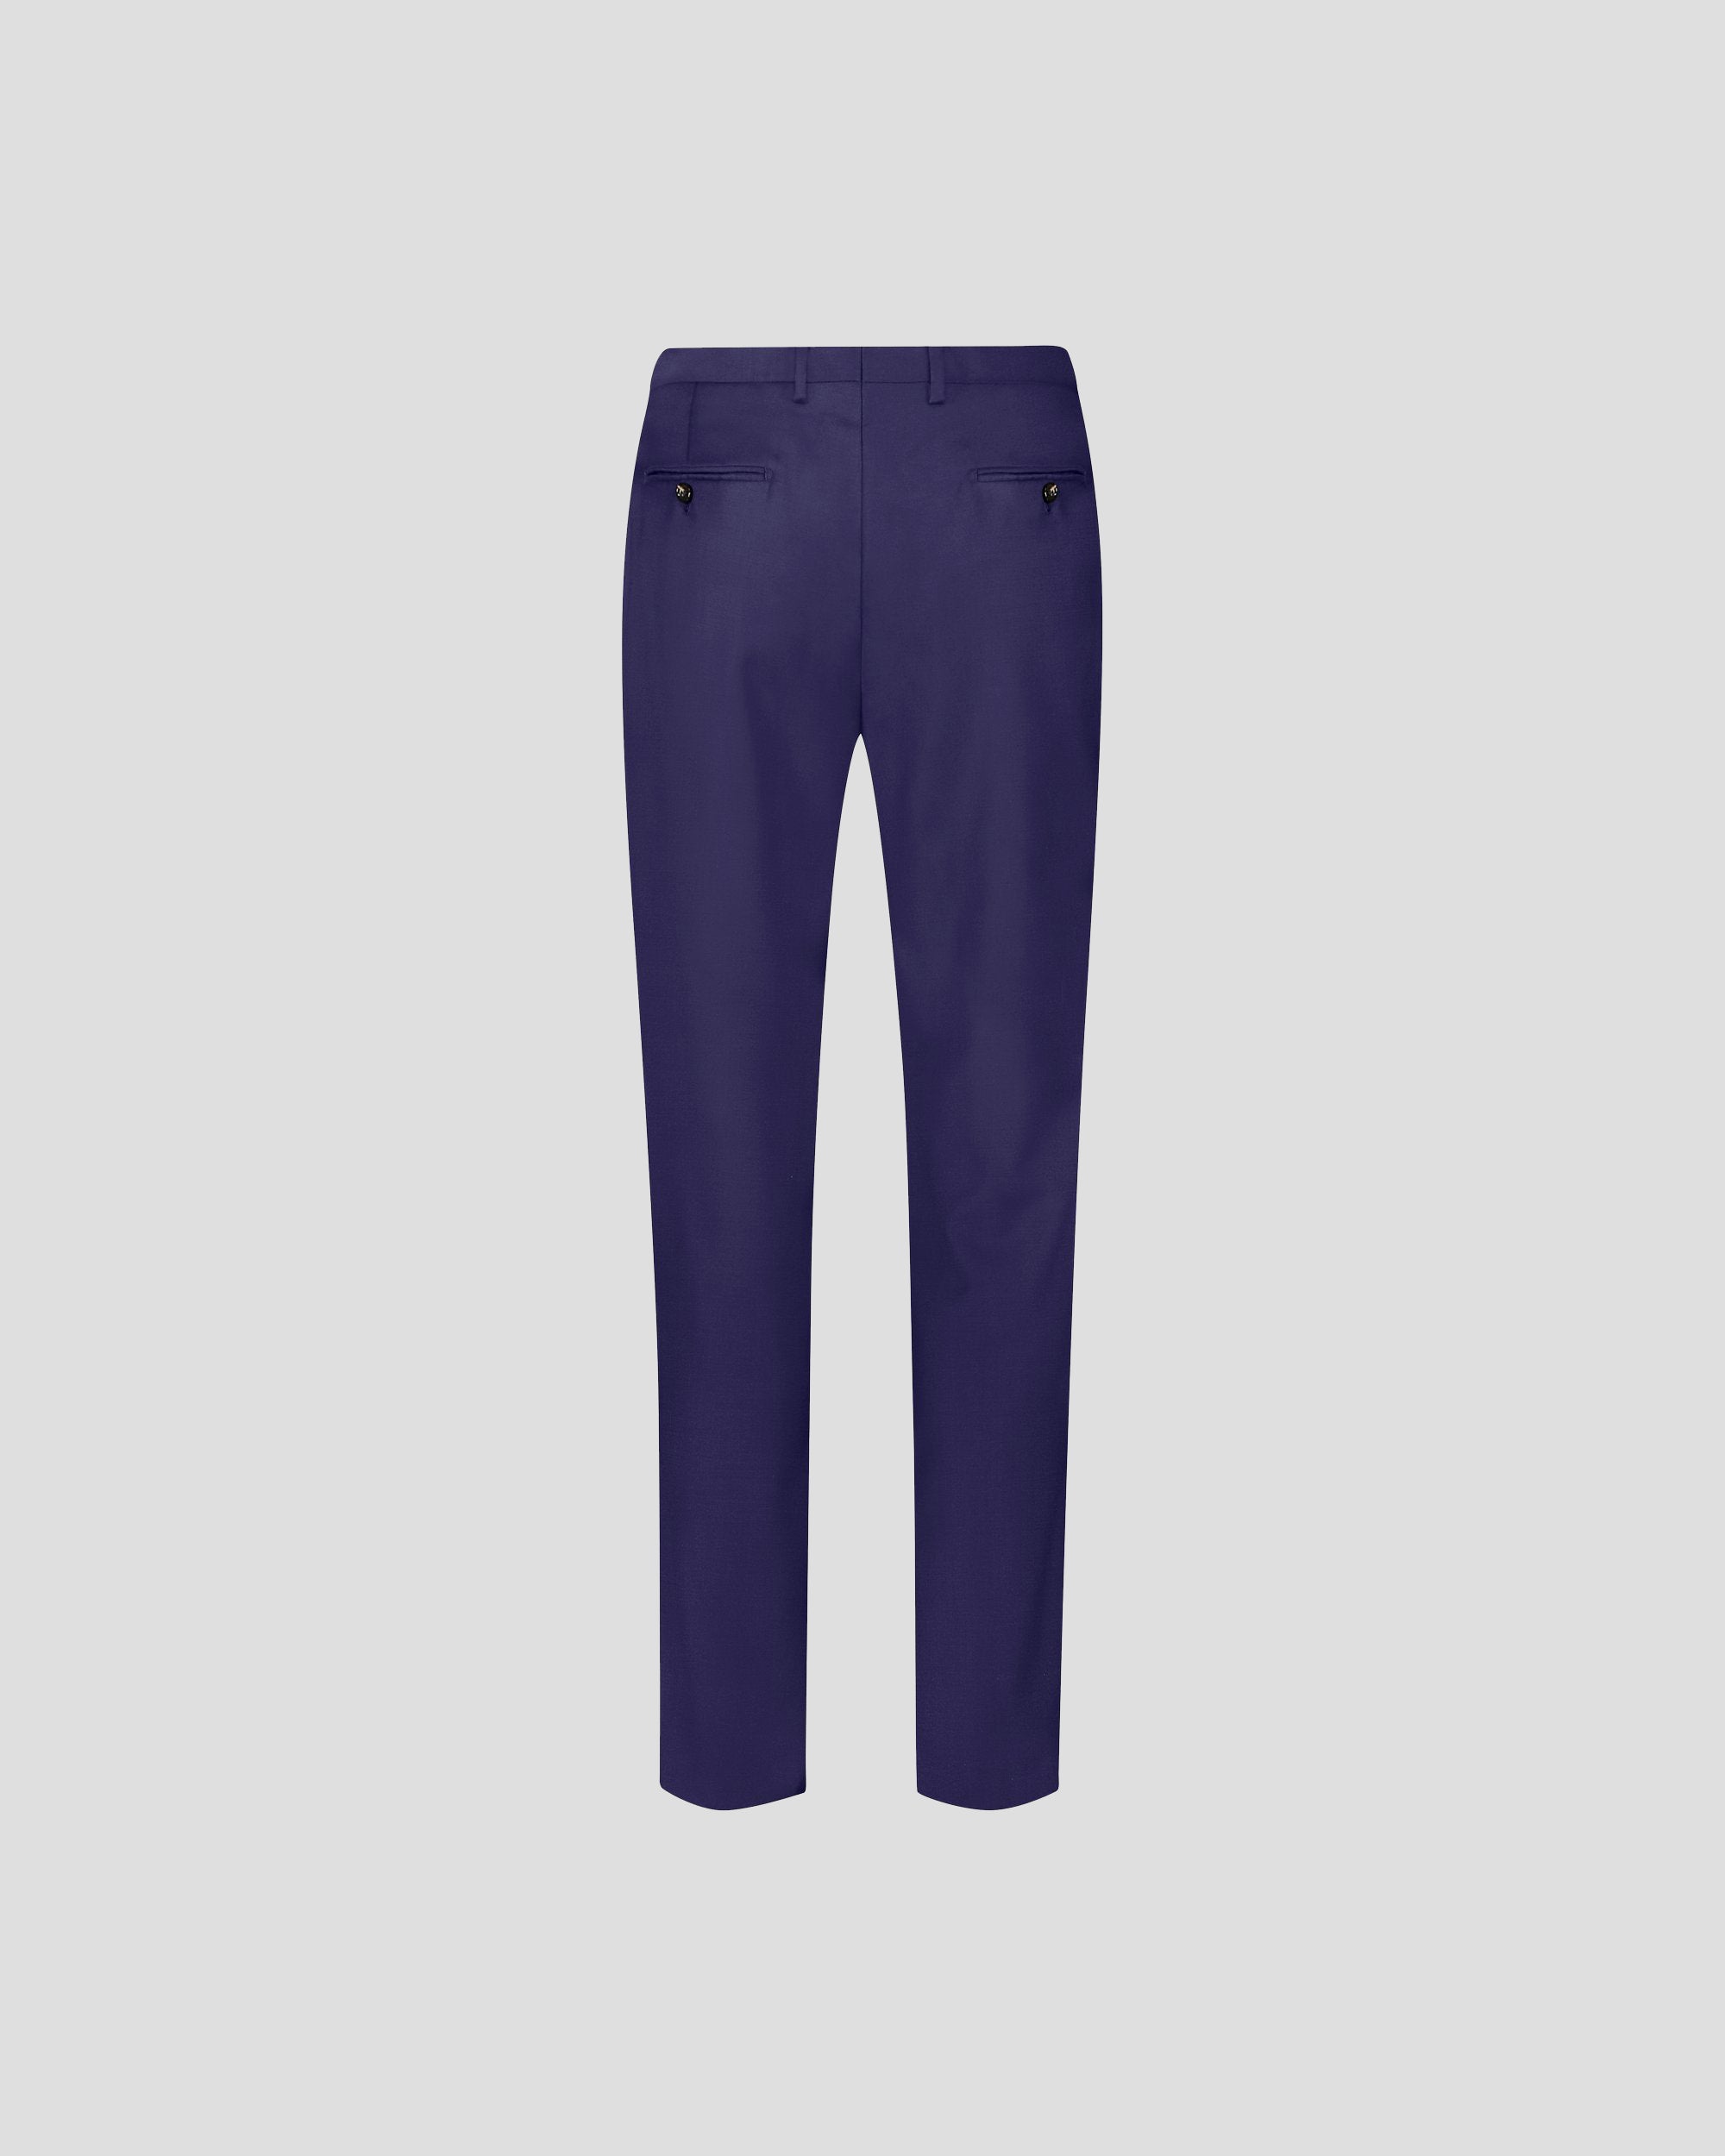 Ditch the denim with these corduroy pants this fall. | Mens purple pants,  Corduroy, Dapper men